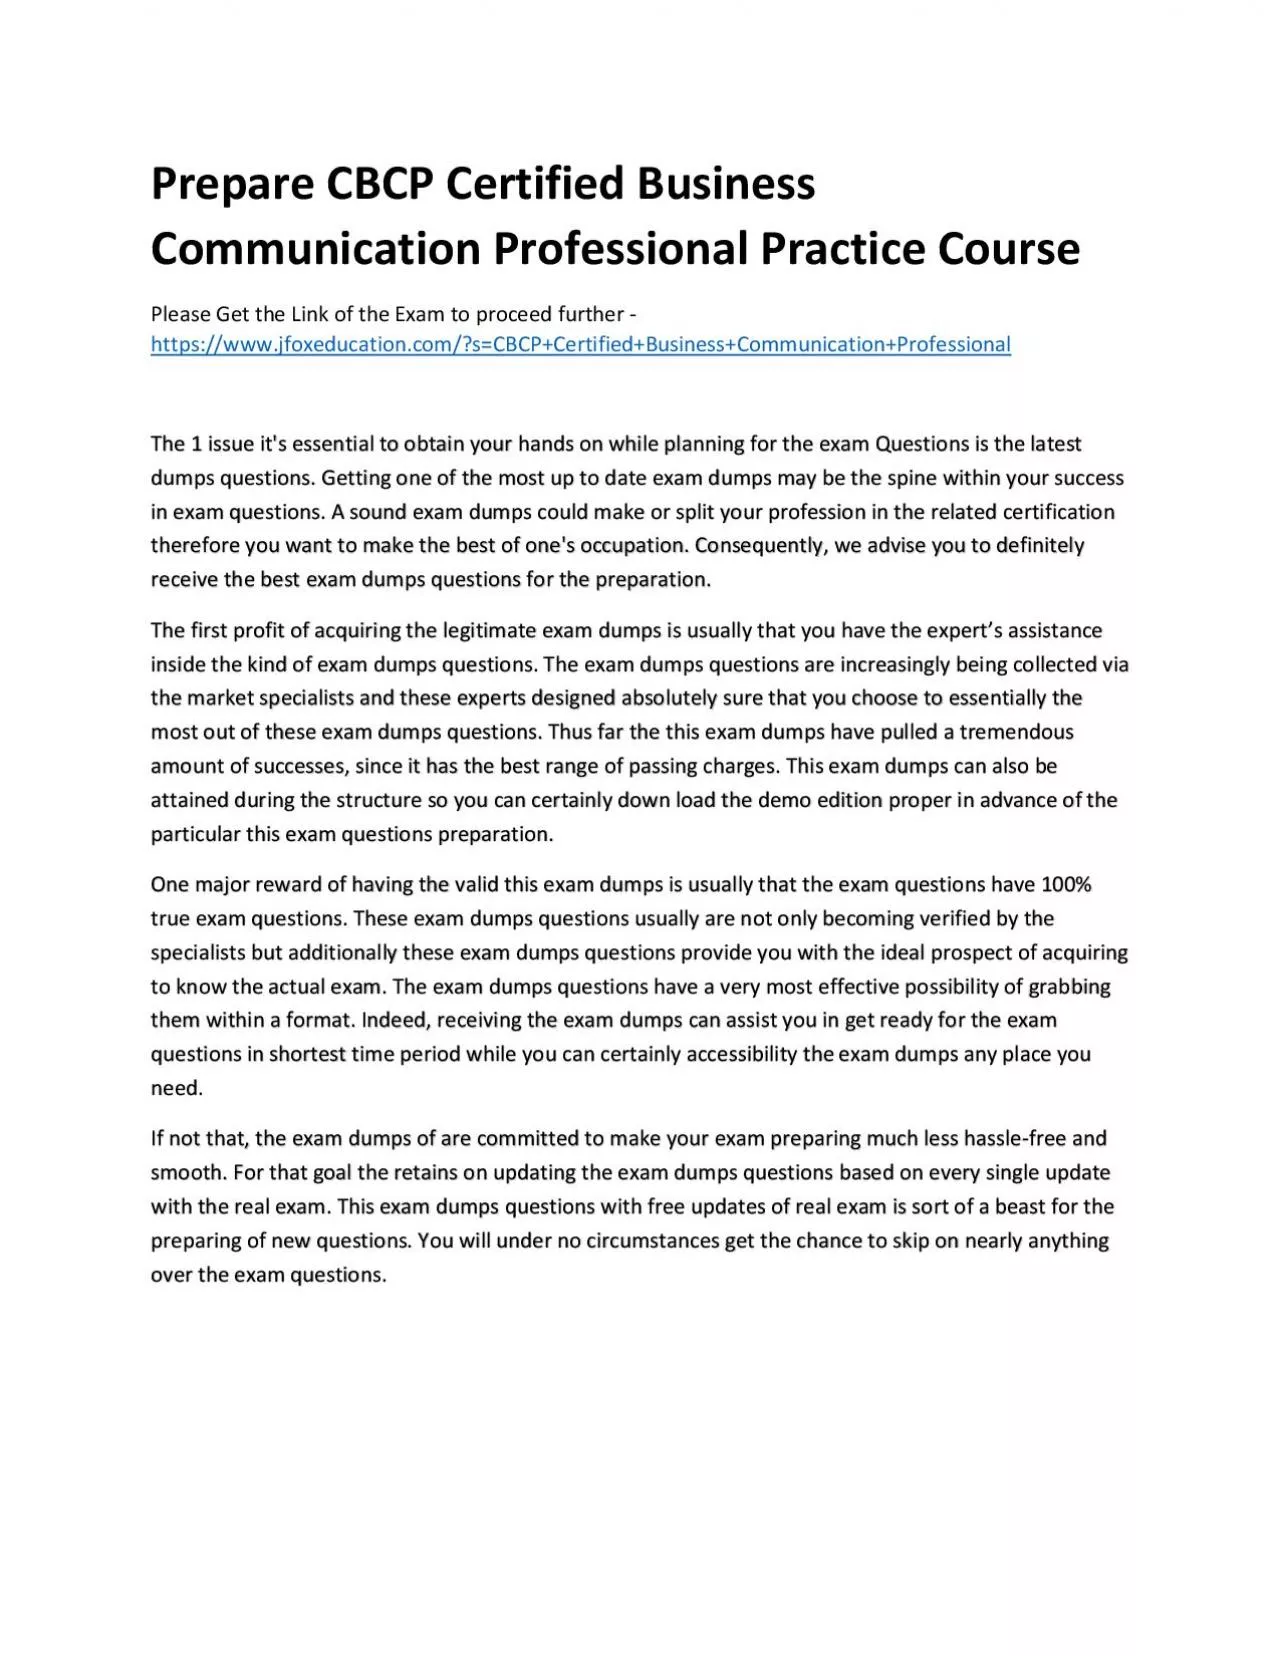 Prepare CBCP Certified Business Communication Professional Practice Course